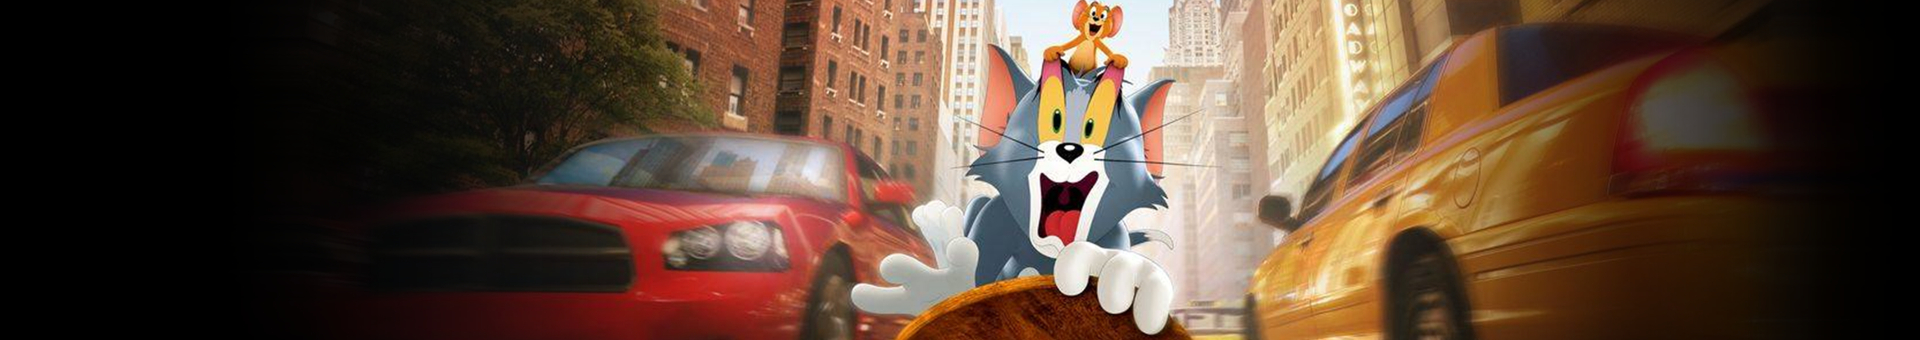 grafika promocyjna do filmu Tom i Jerry 2021